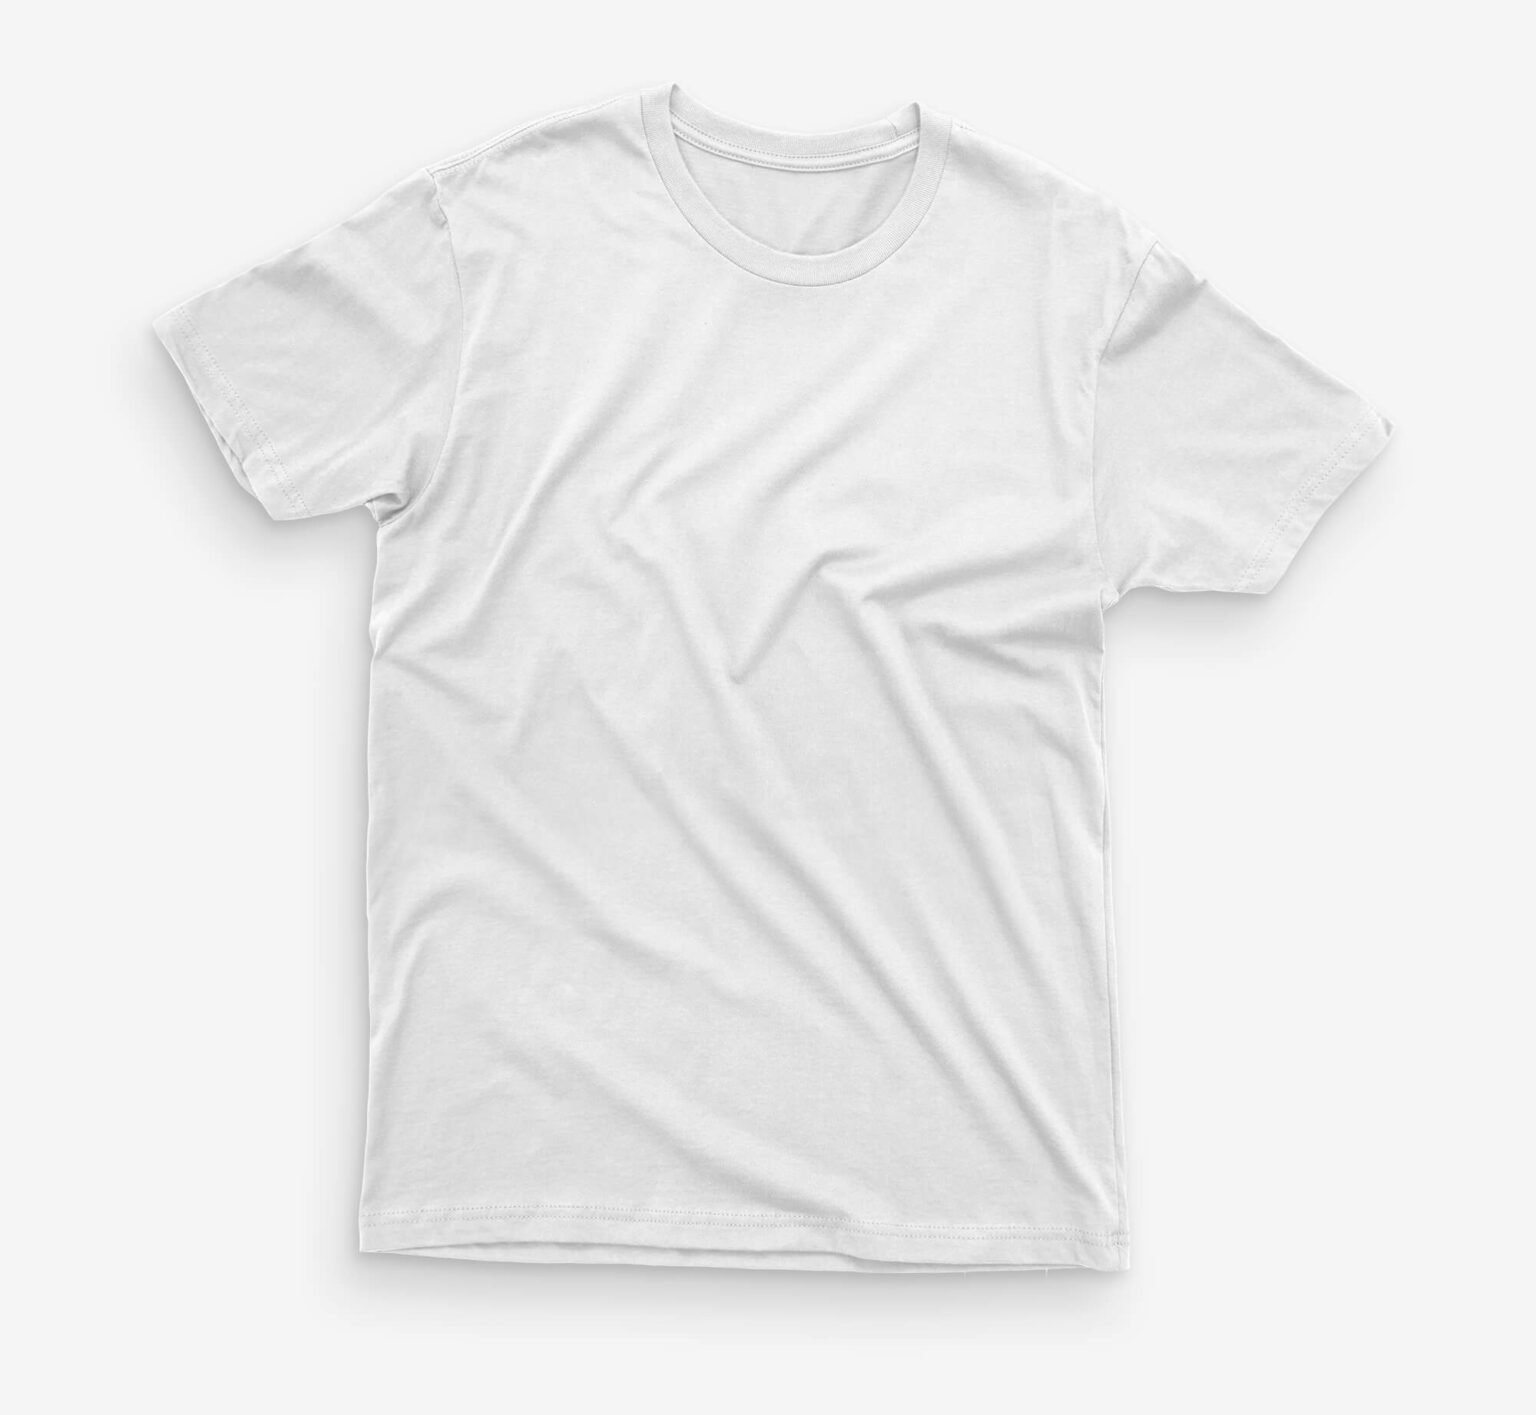 Free Round Neck T Shirt Mockup PSD Template - M